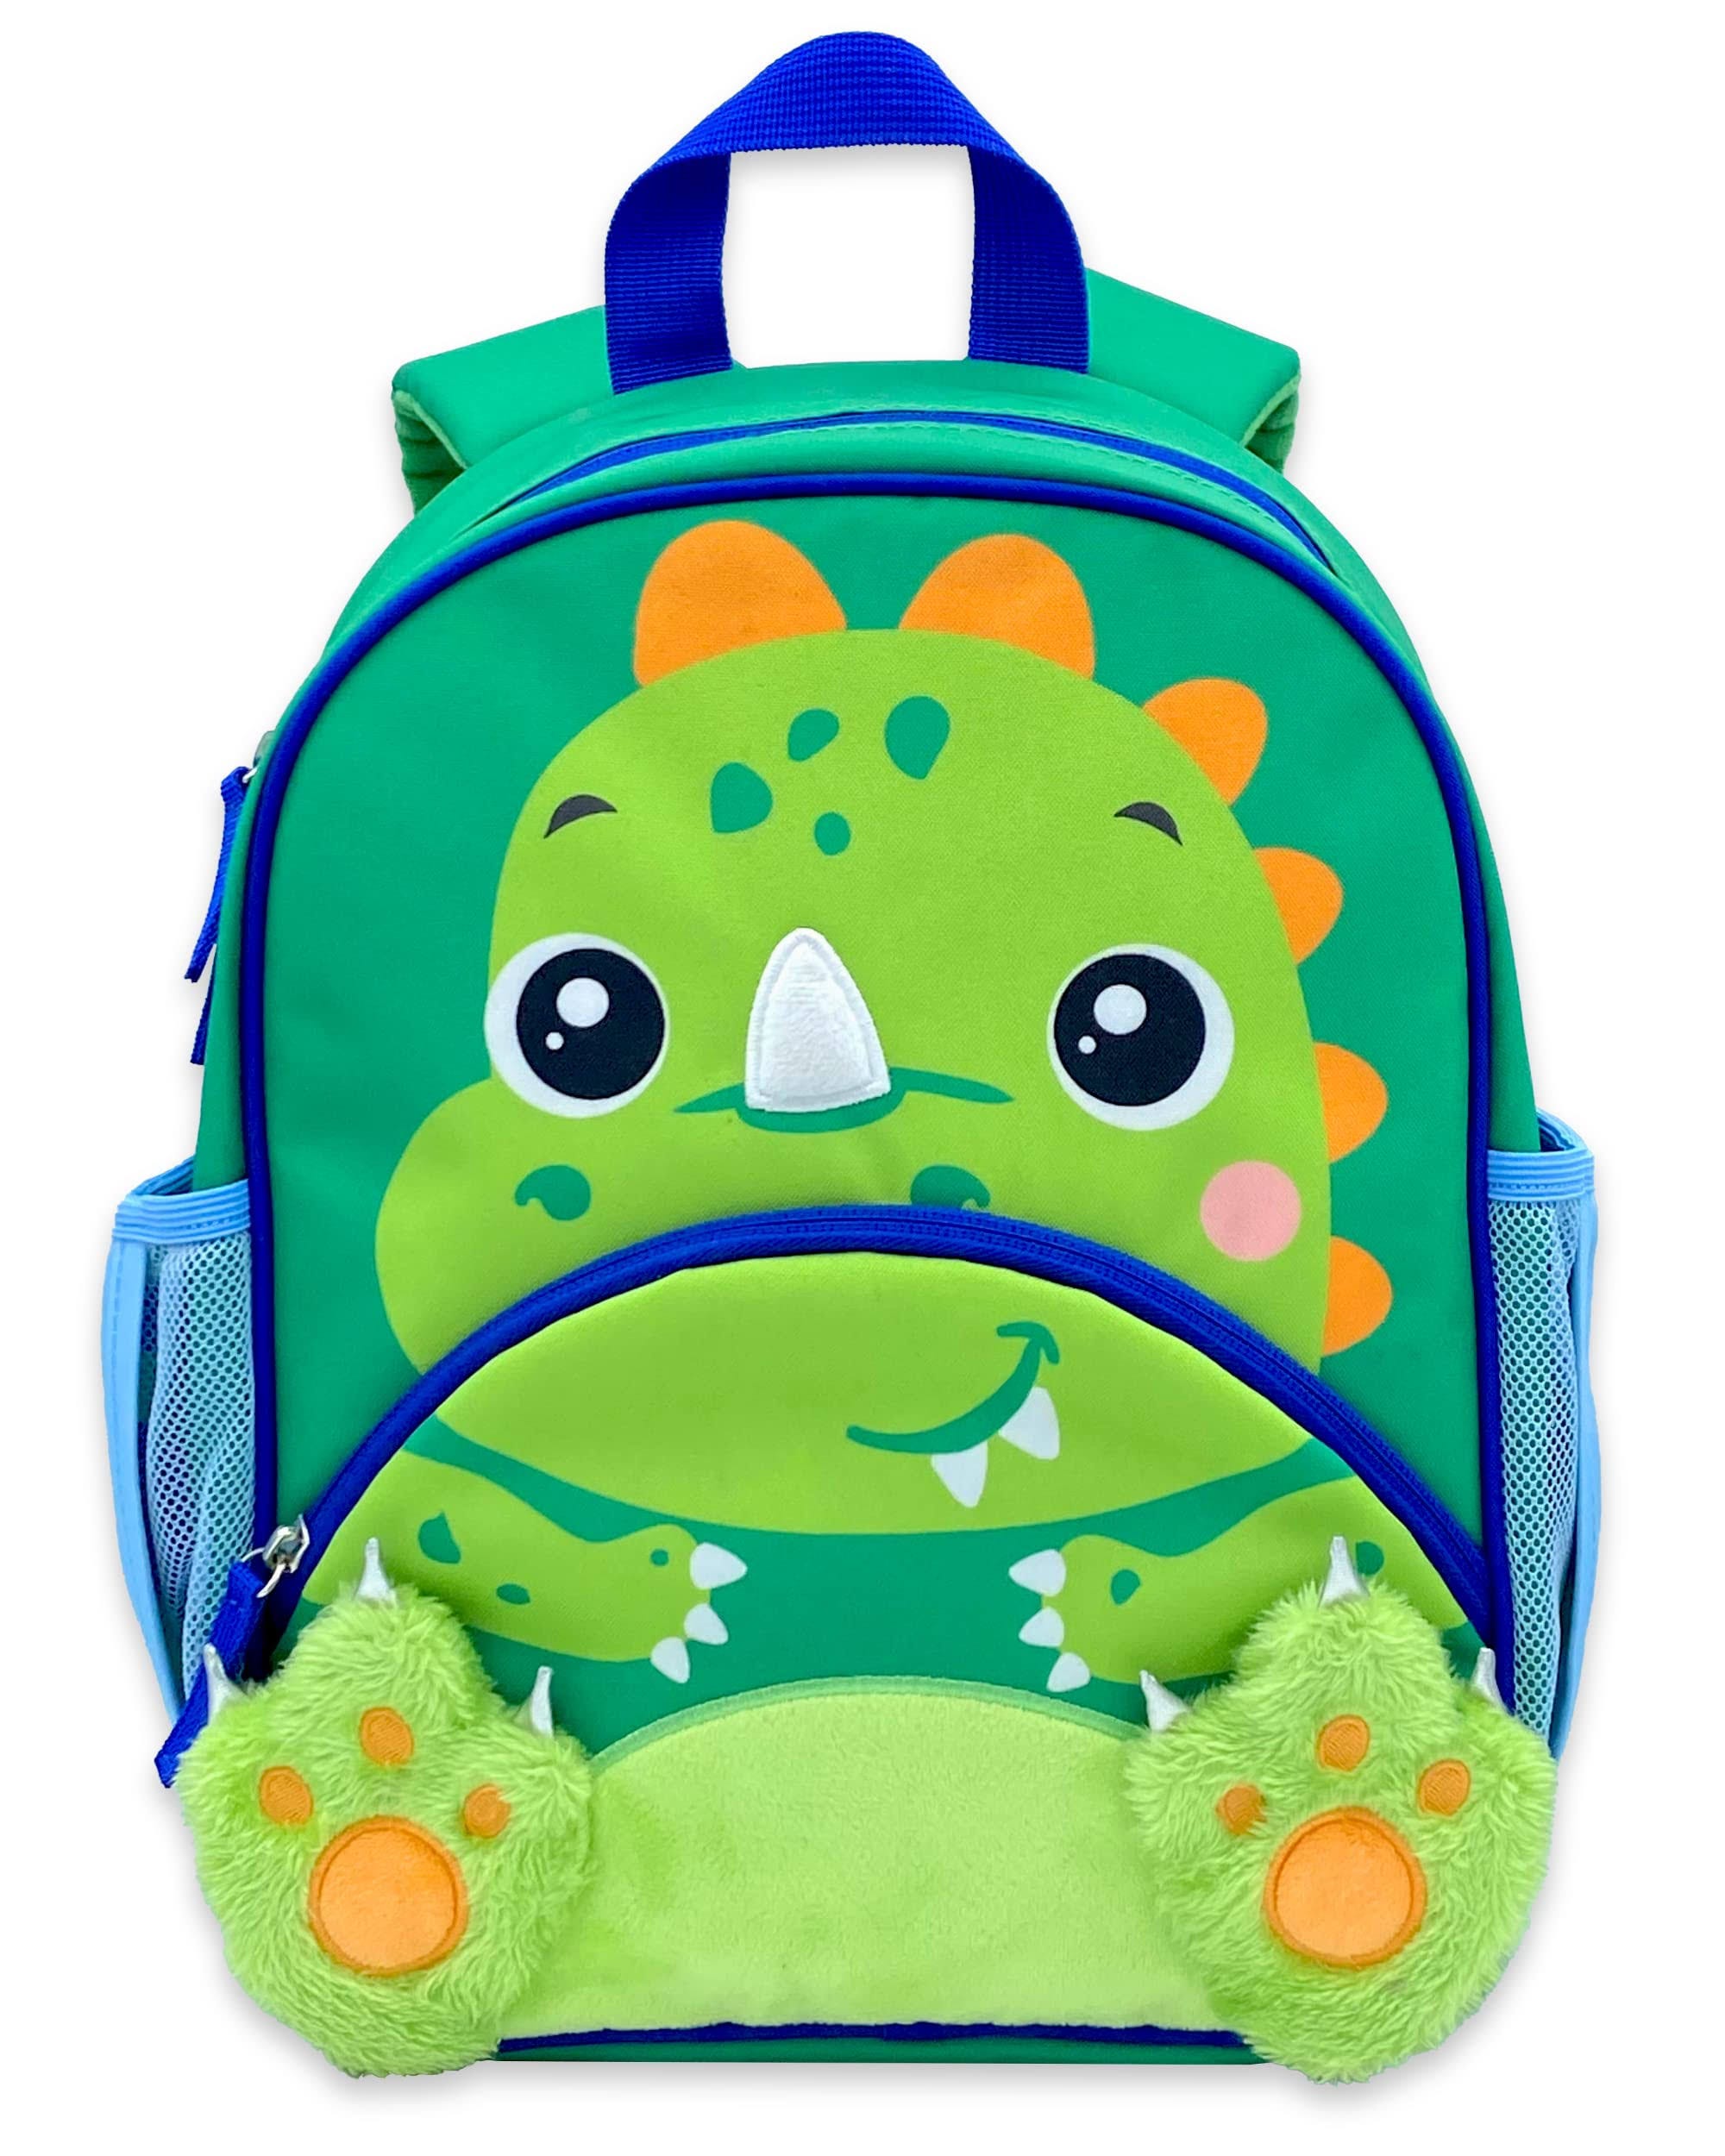 Move2play Dinosaur Kindergarten Backpack | Image